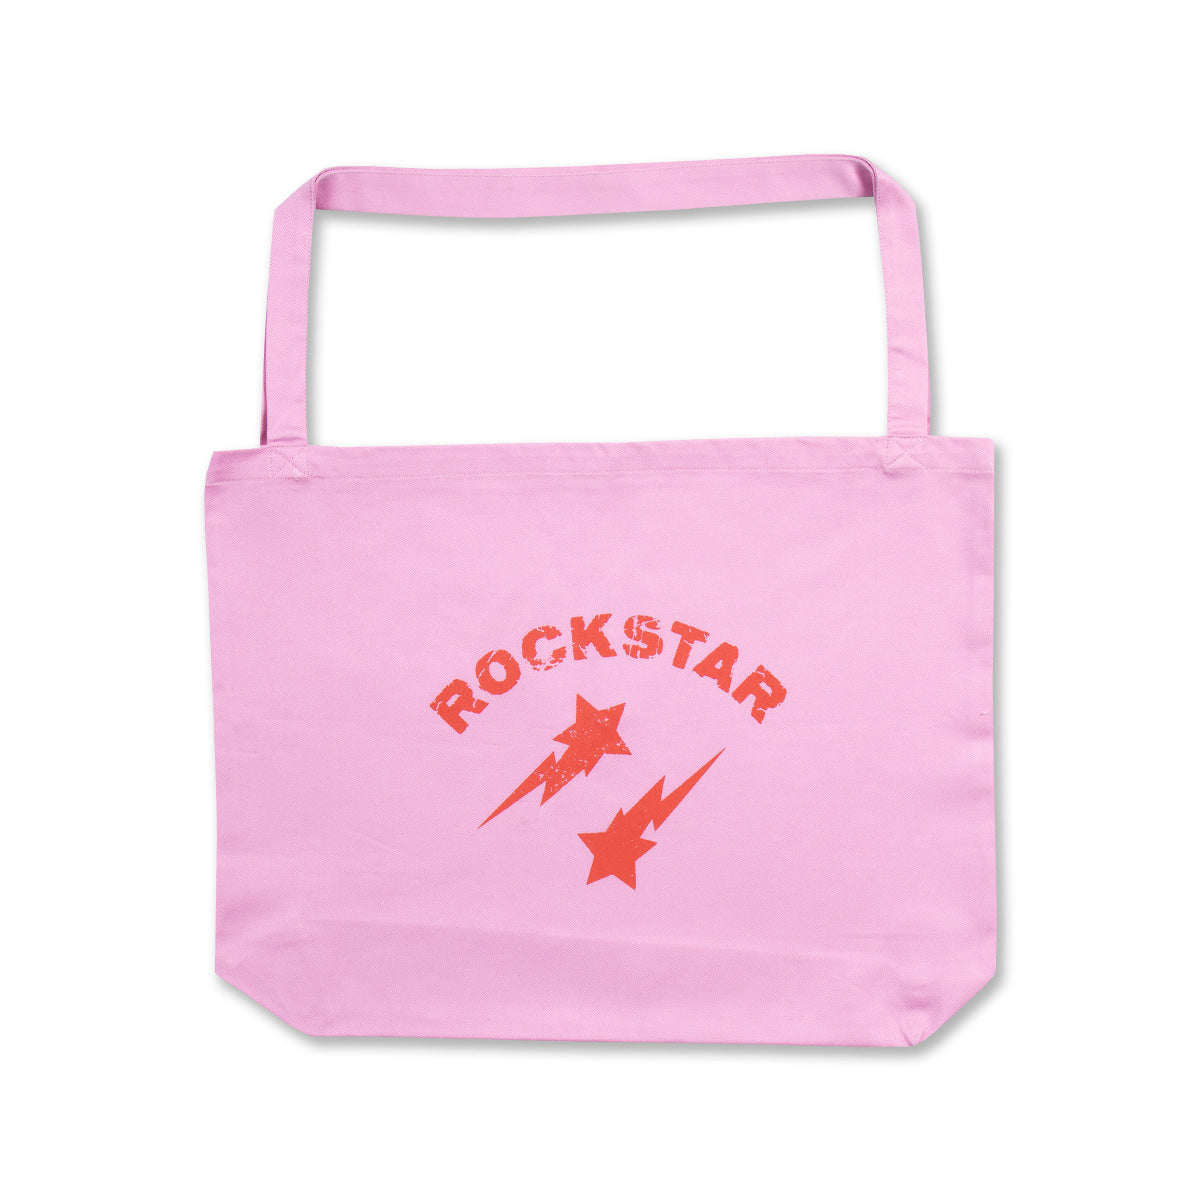 Mom Bag "ROCKSTAR" | Pastel Lavender